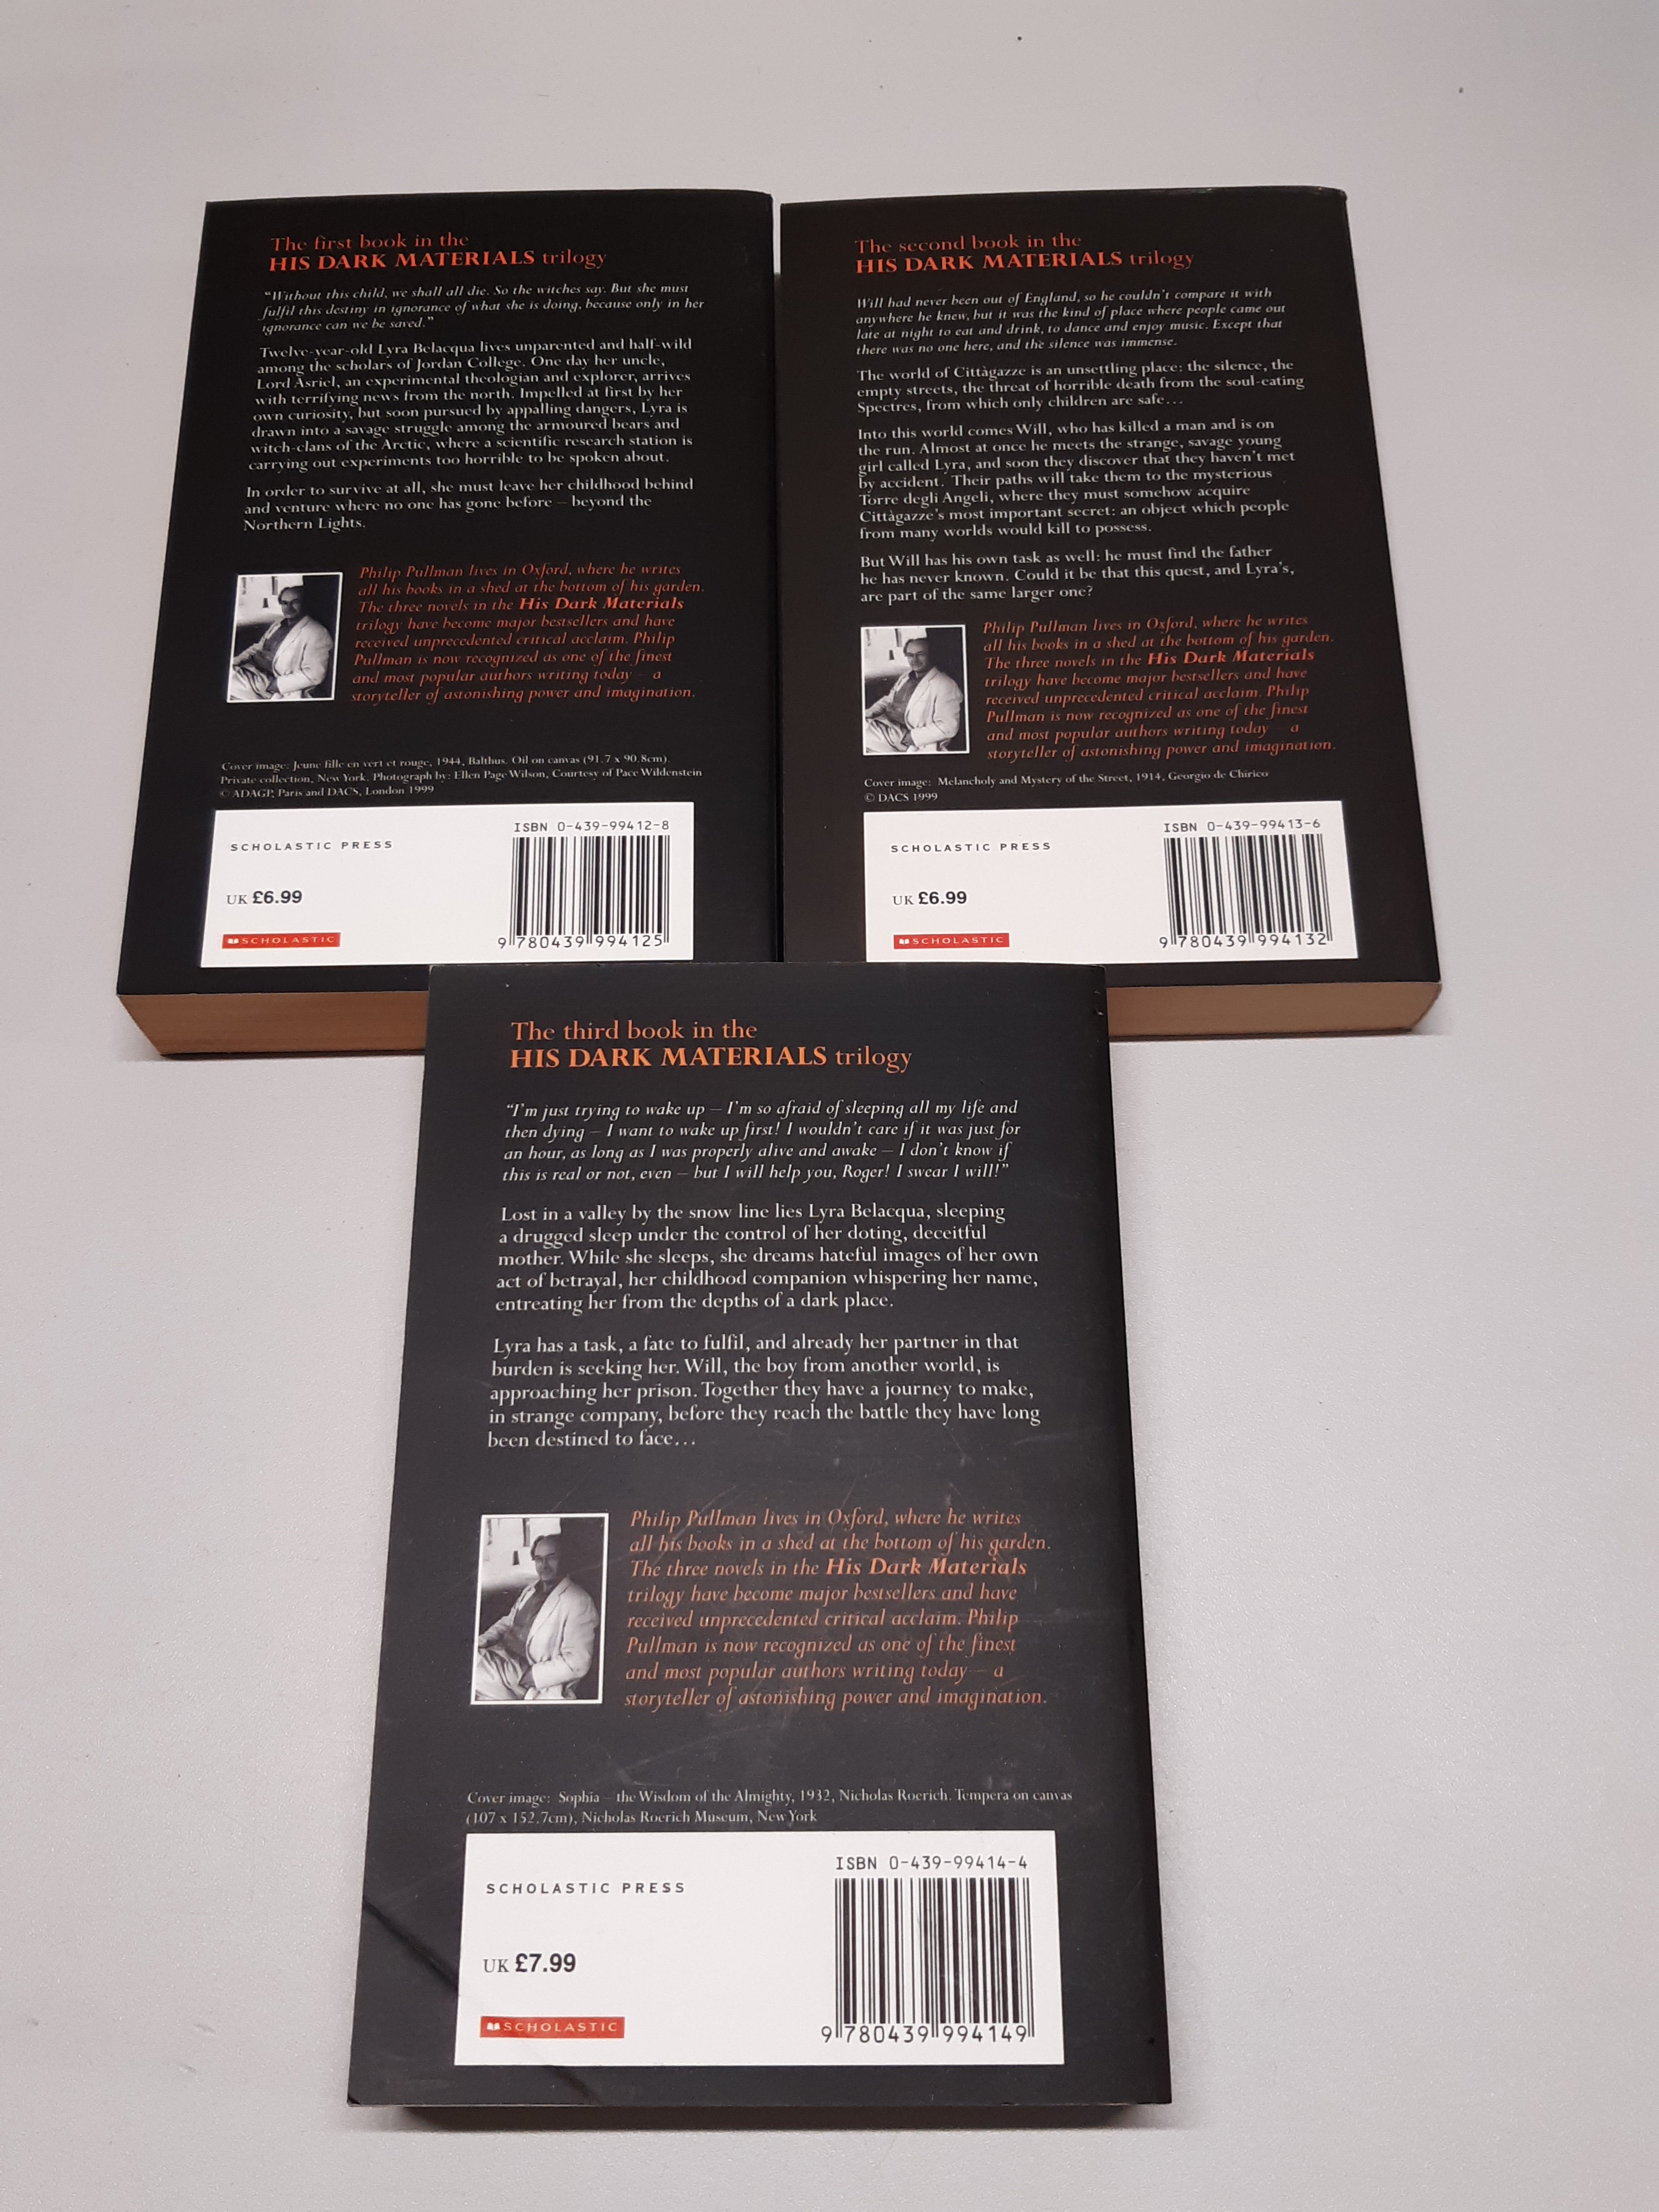 Philip Pullman - His Dark Materials trilogy complete